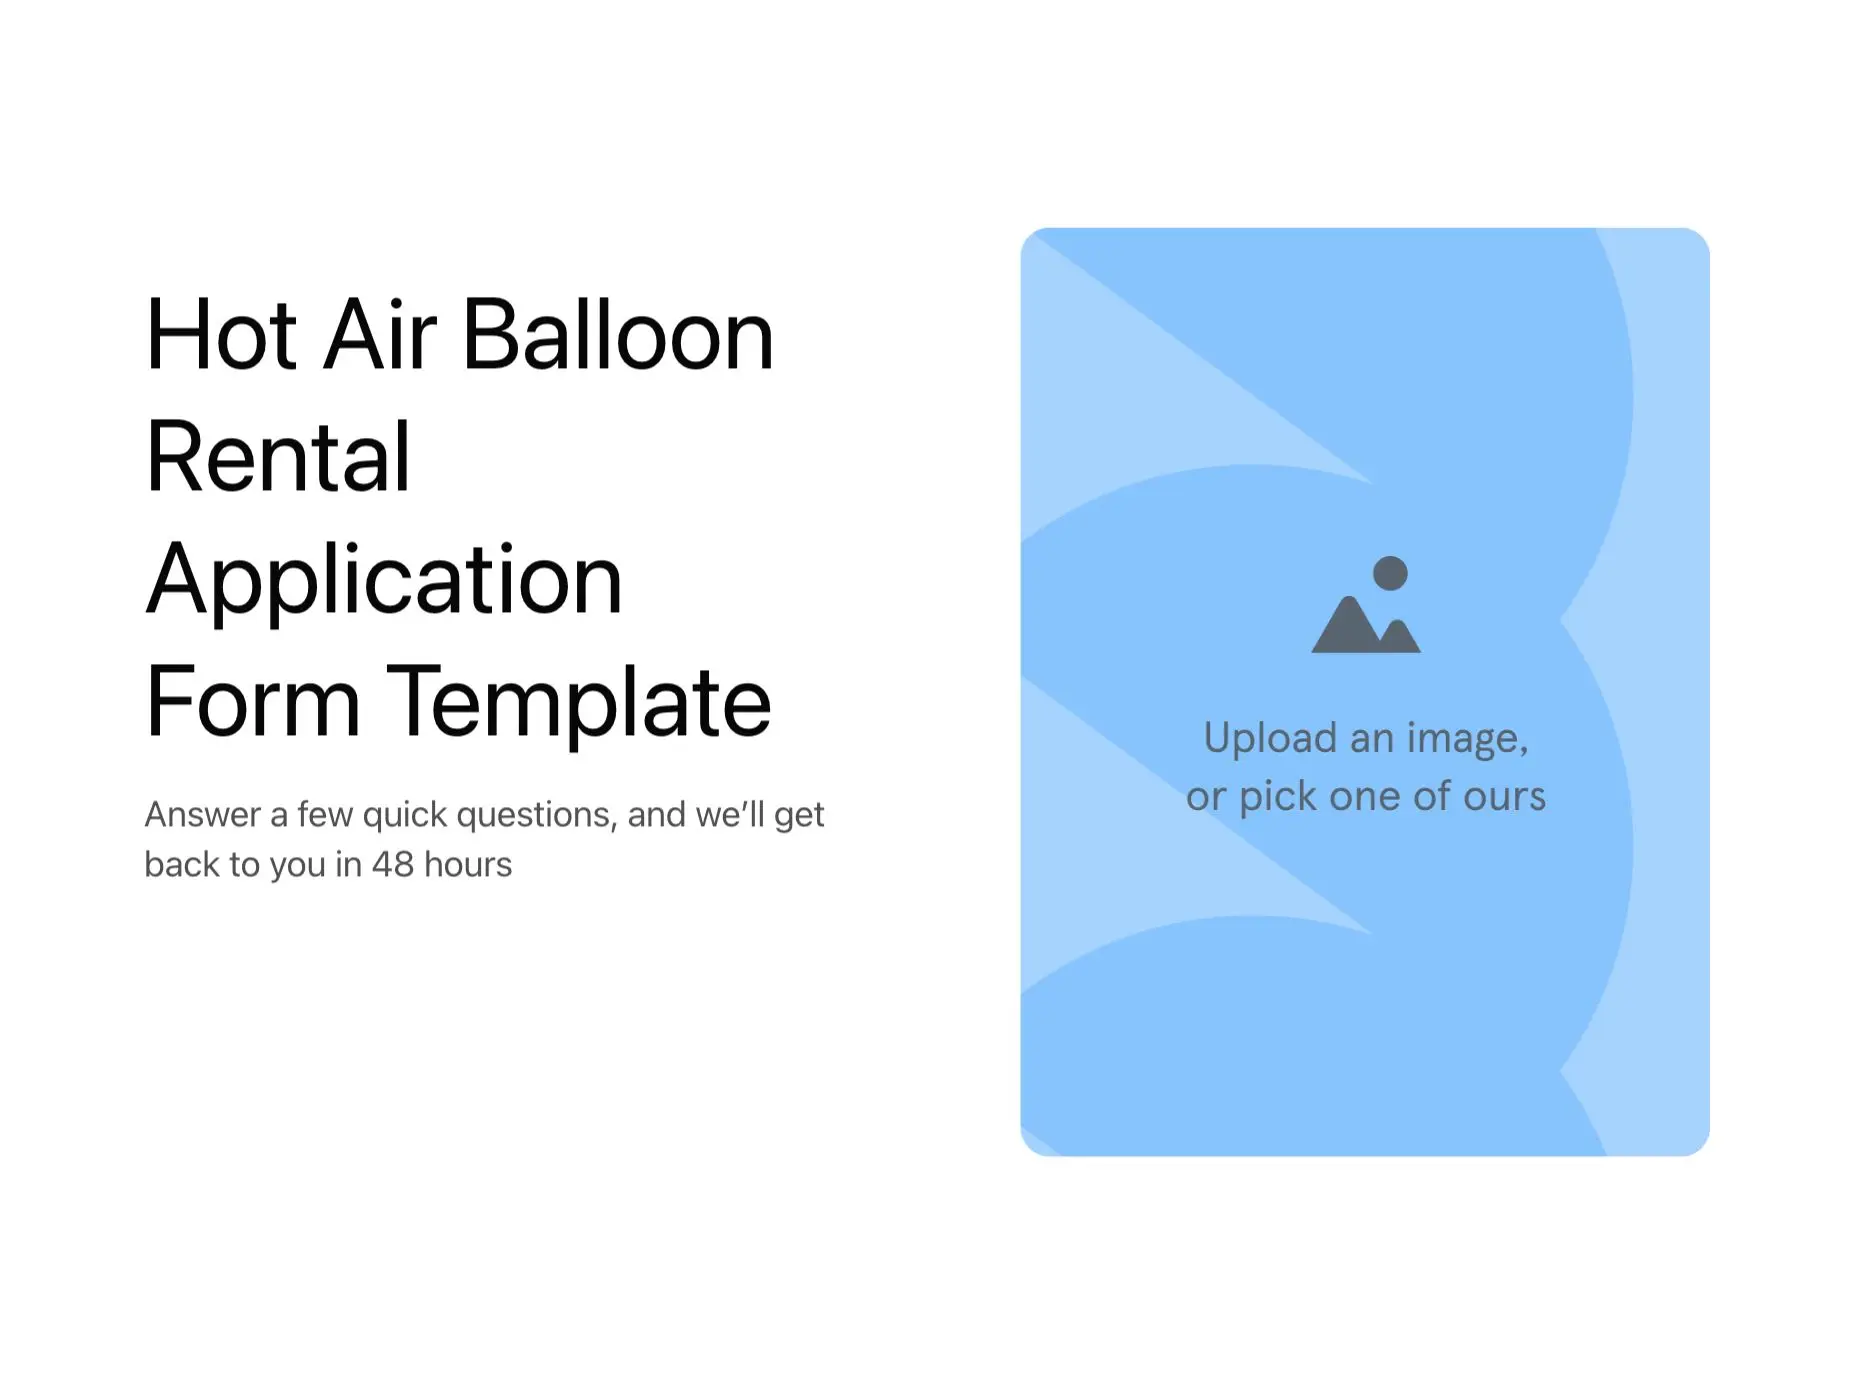 Hot Air Balloon Rental Application Form Template Hero